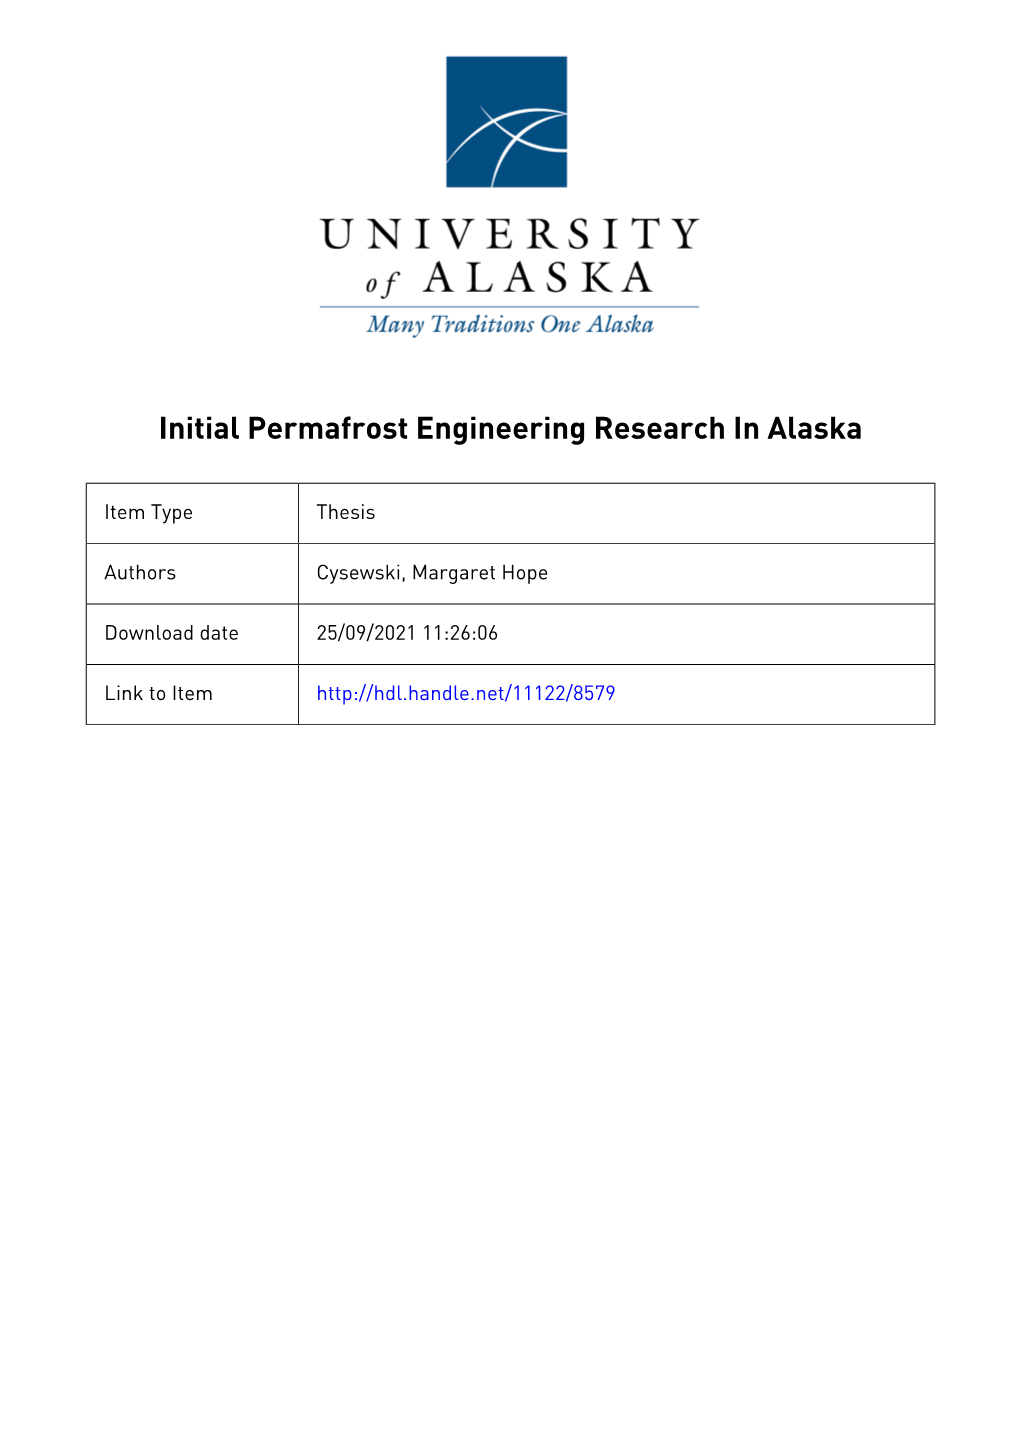 Initial Permafrost Engineering Research in Alaska